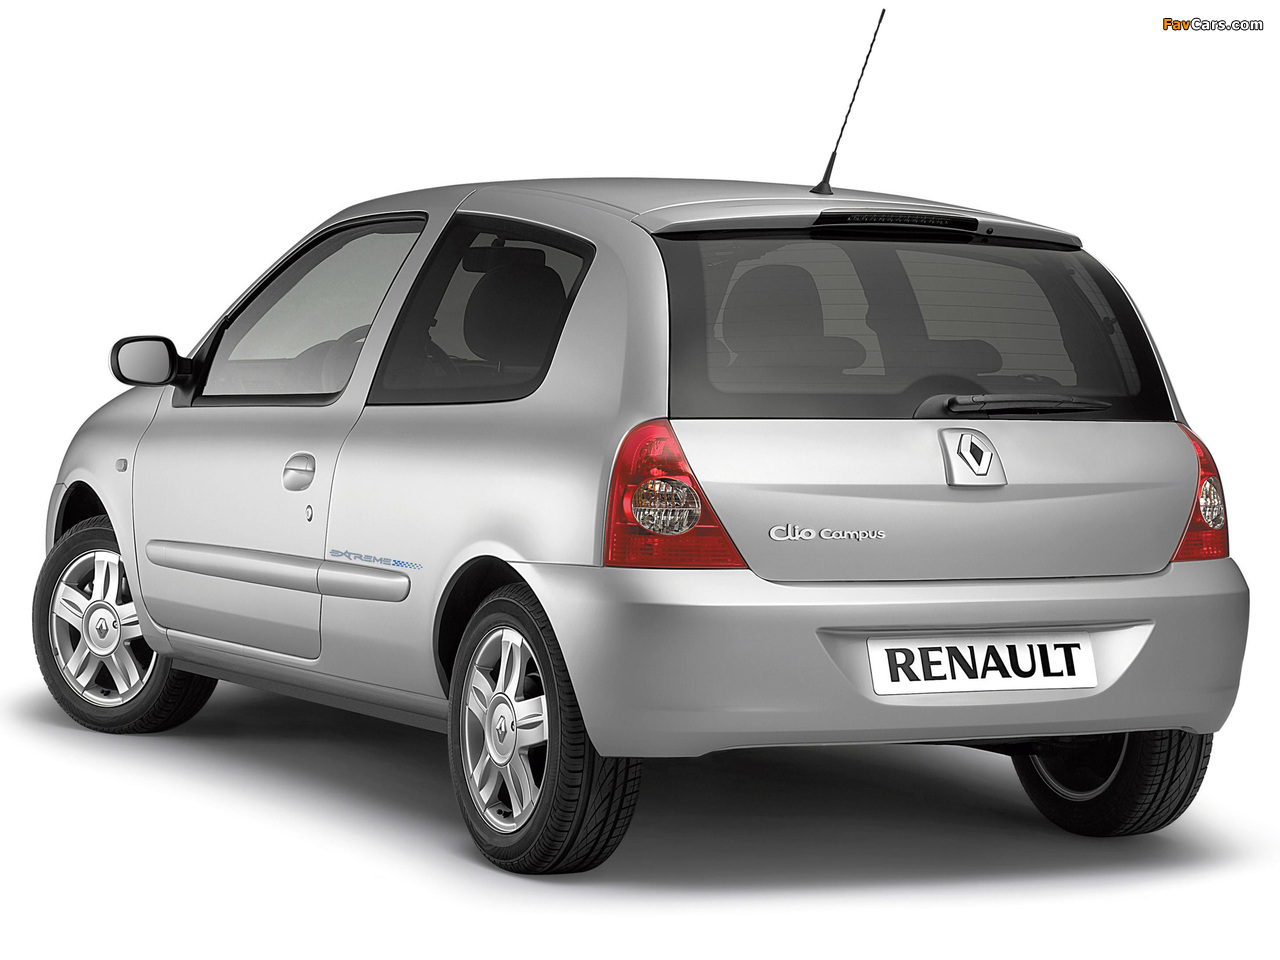 Renault Clio Campus 3-door 2006–09 images (1280 x 960)